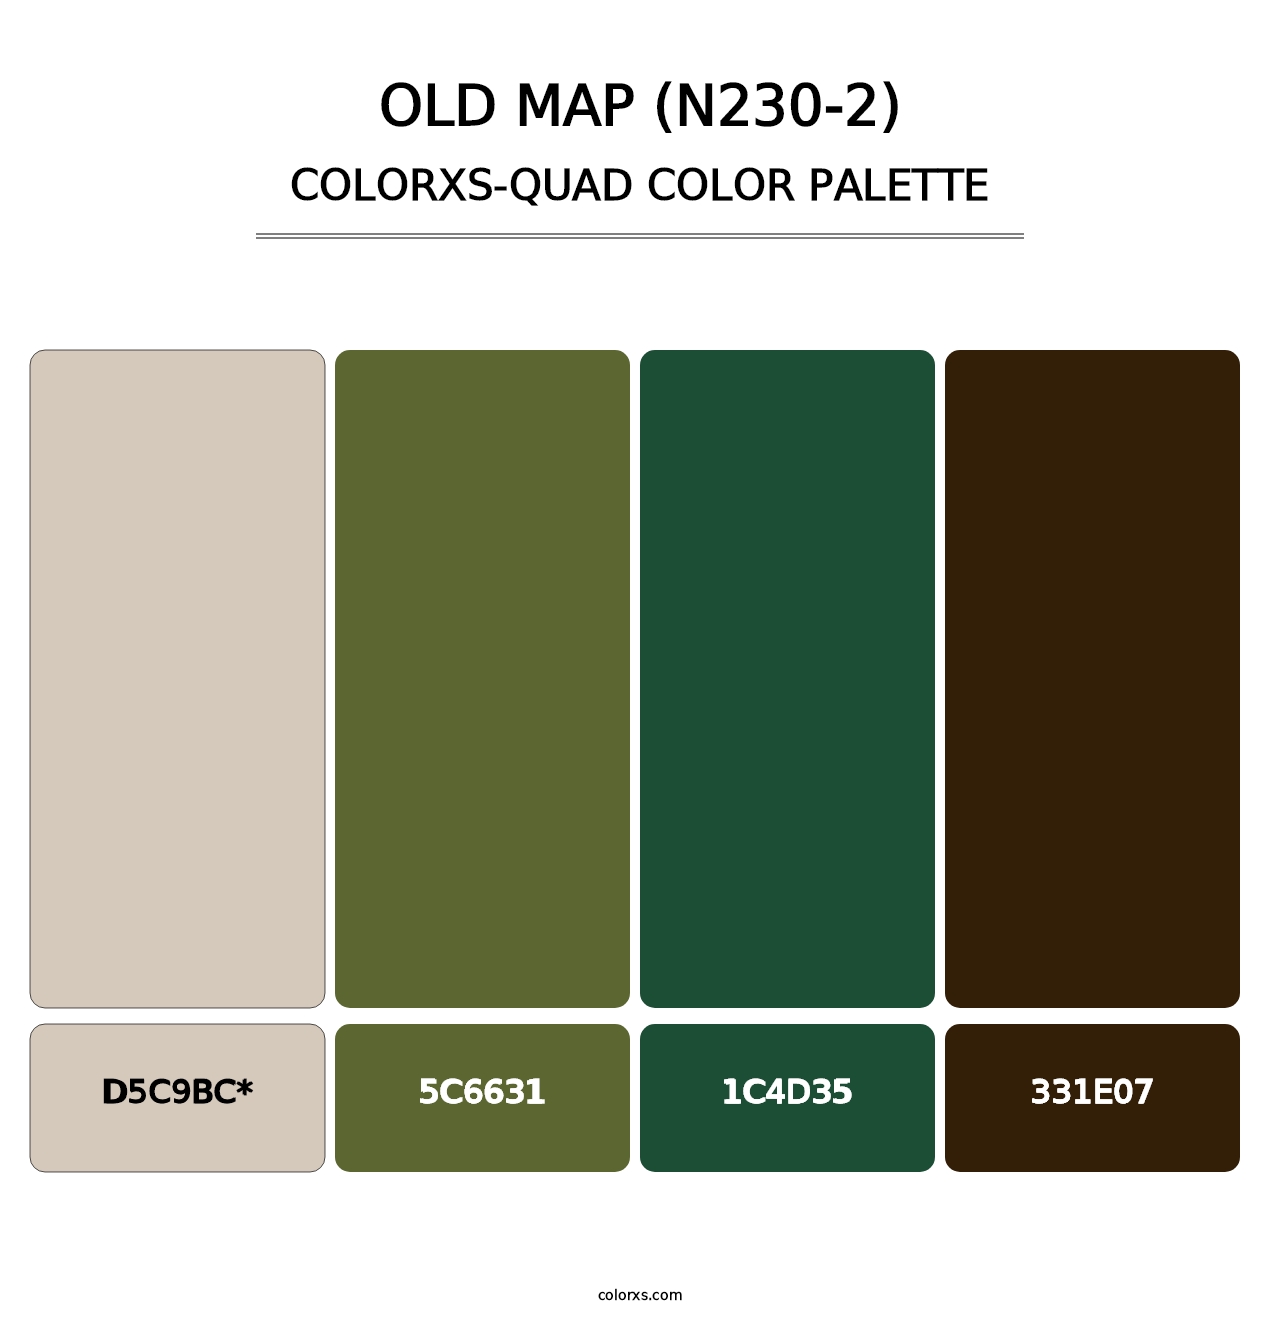 Old Map (N230-2) - Colorxs Quad Palette